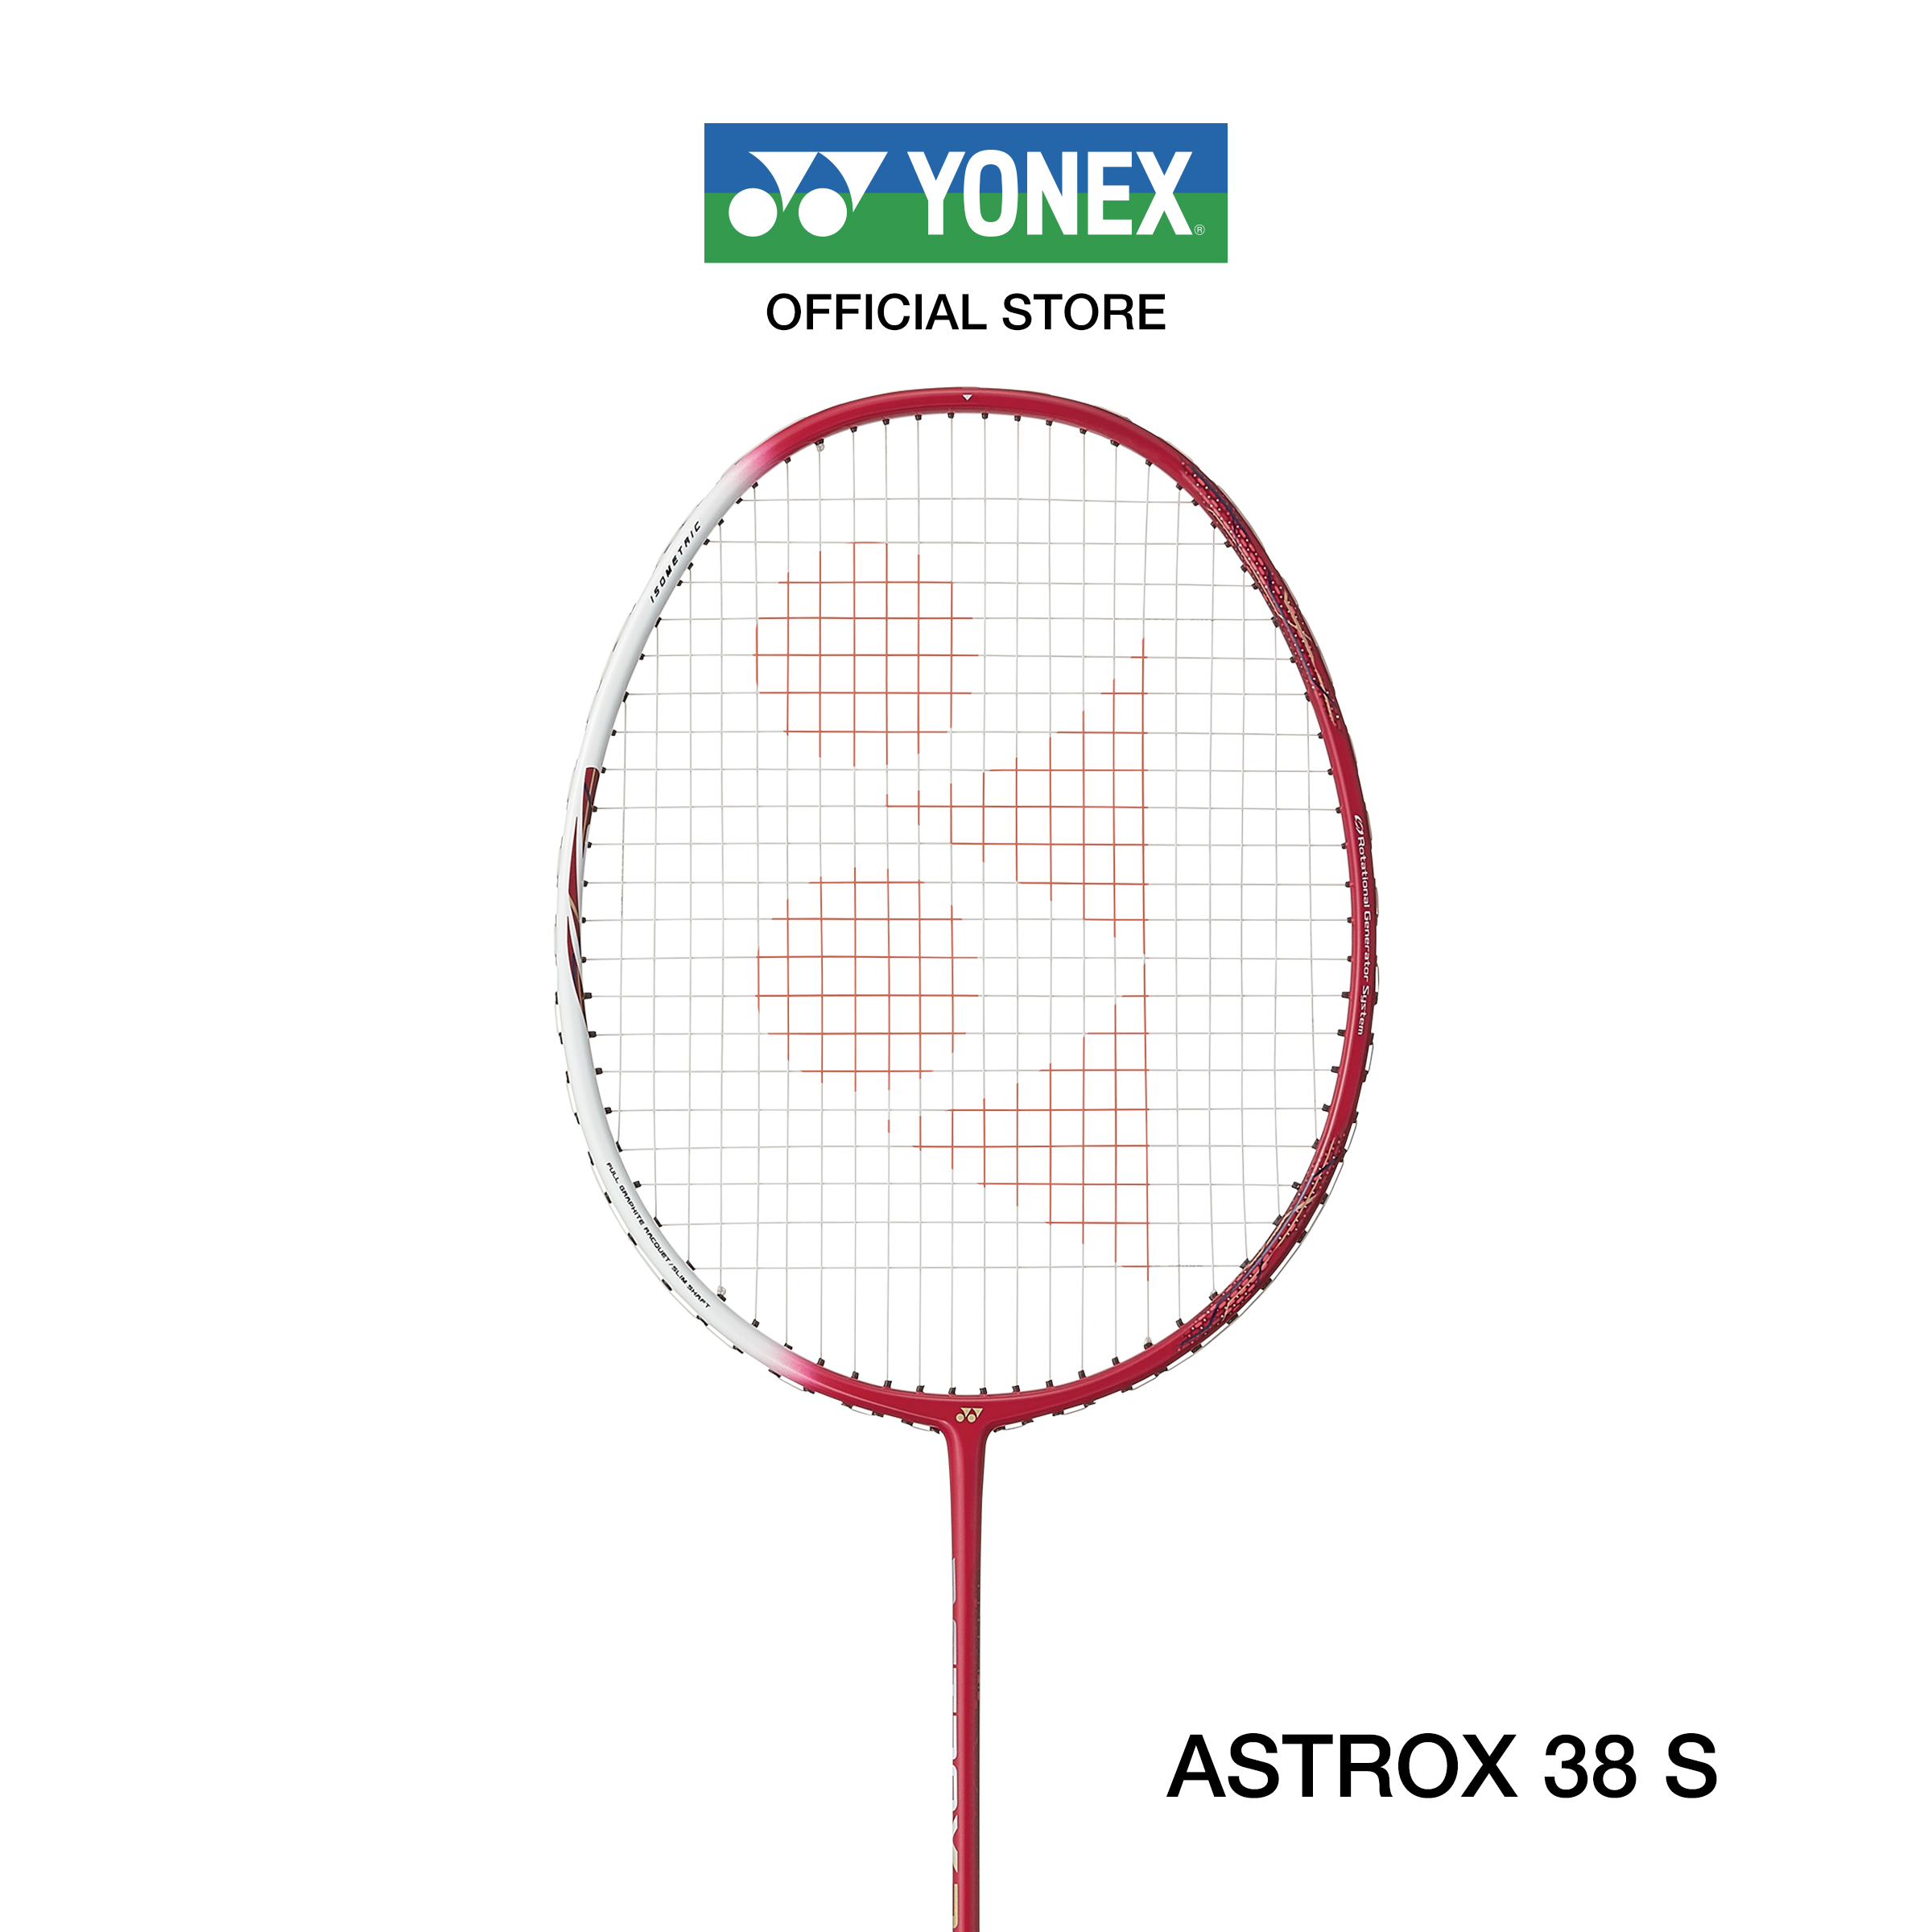 YONEX ไม้แบดมินตัน รุ่น ASTROX 38S น้ำหนัก 83g (4U G5) ไม้หัวหนัก ก้านแข็ง สำหรับผู้เล่นที่ชอบเล่นเกมเร็ว แถมเอ็น BG65